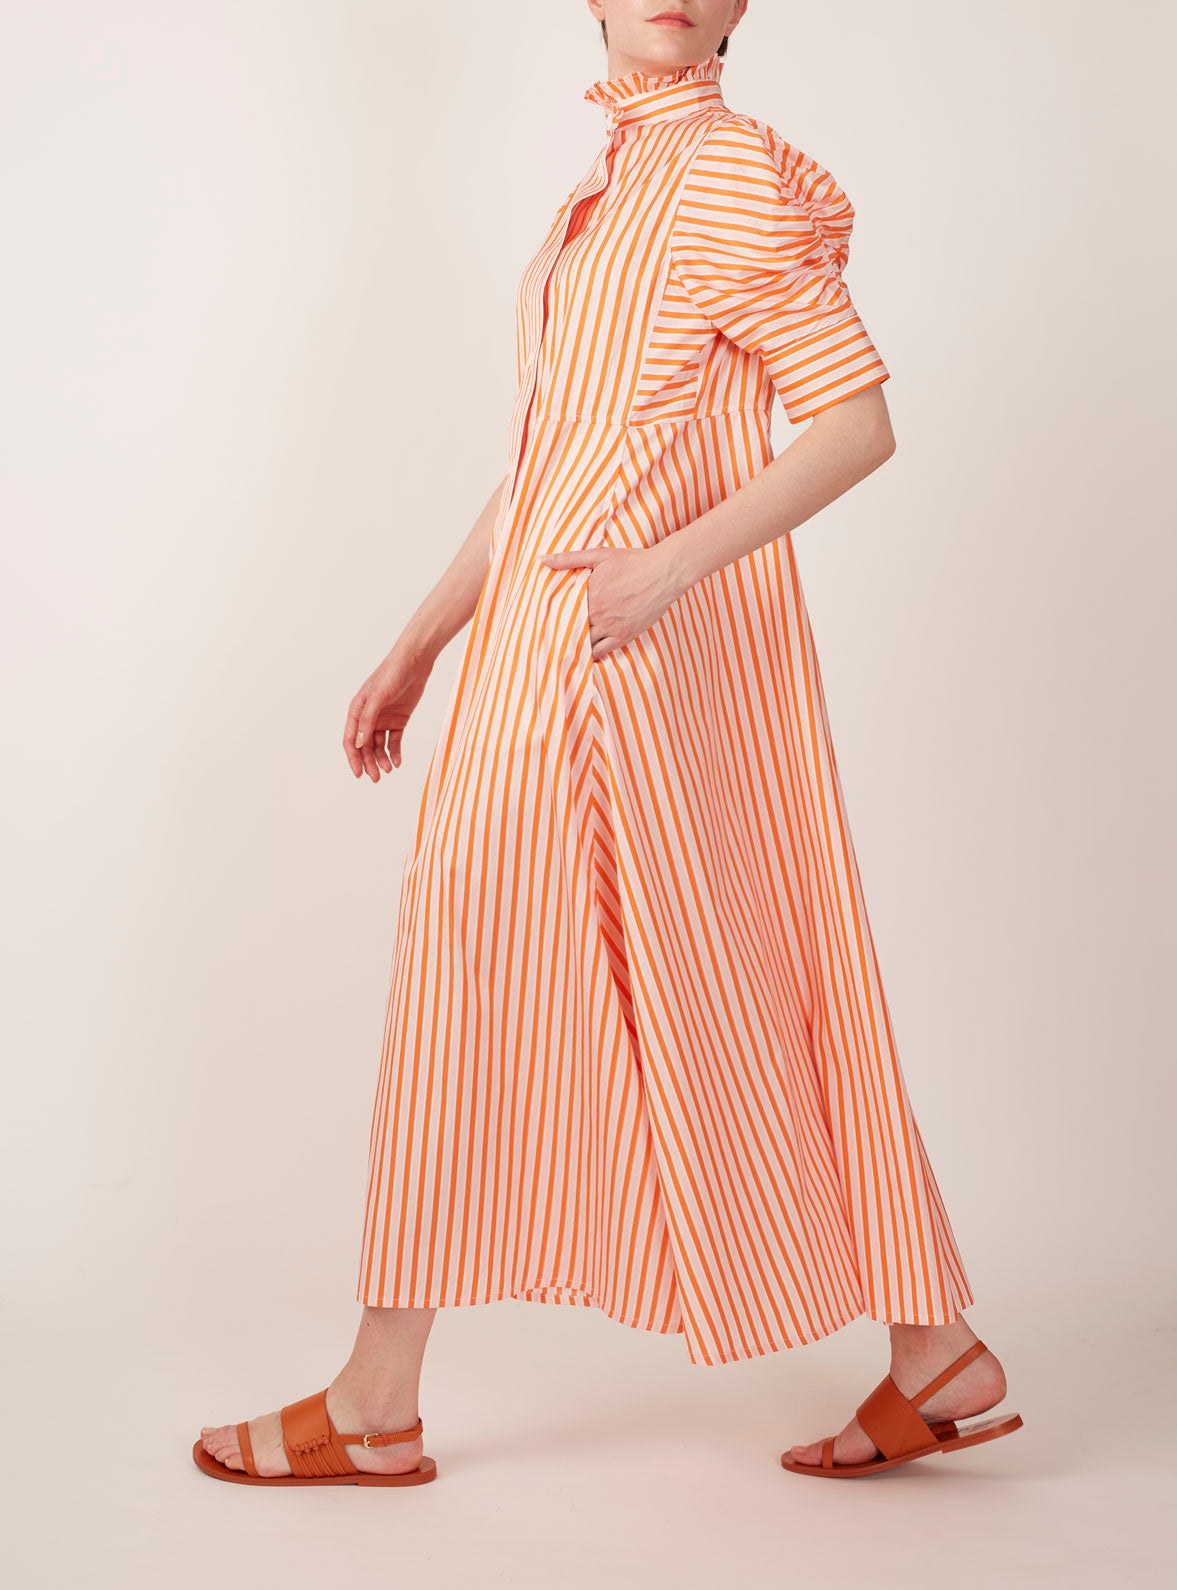 Side view of Venetia Mayfair - Orange, Salmon & White Dress by Thierry Colson